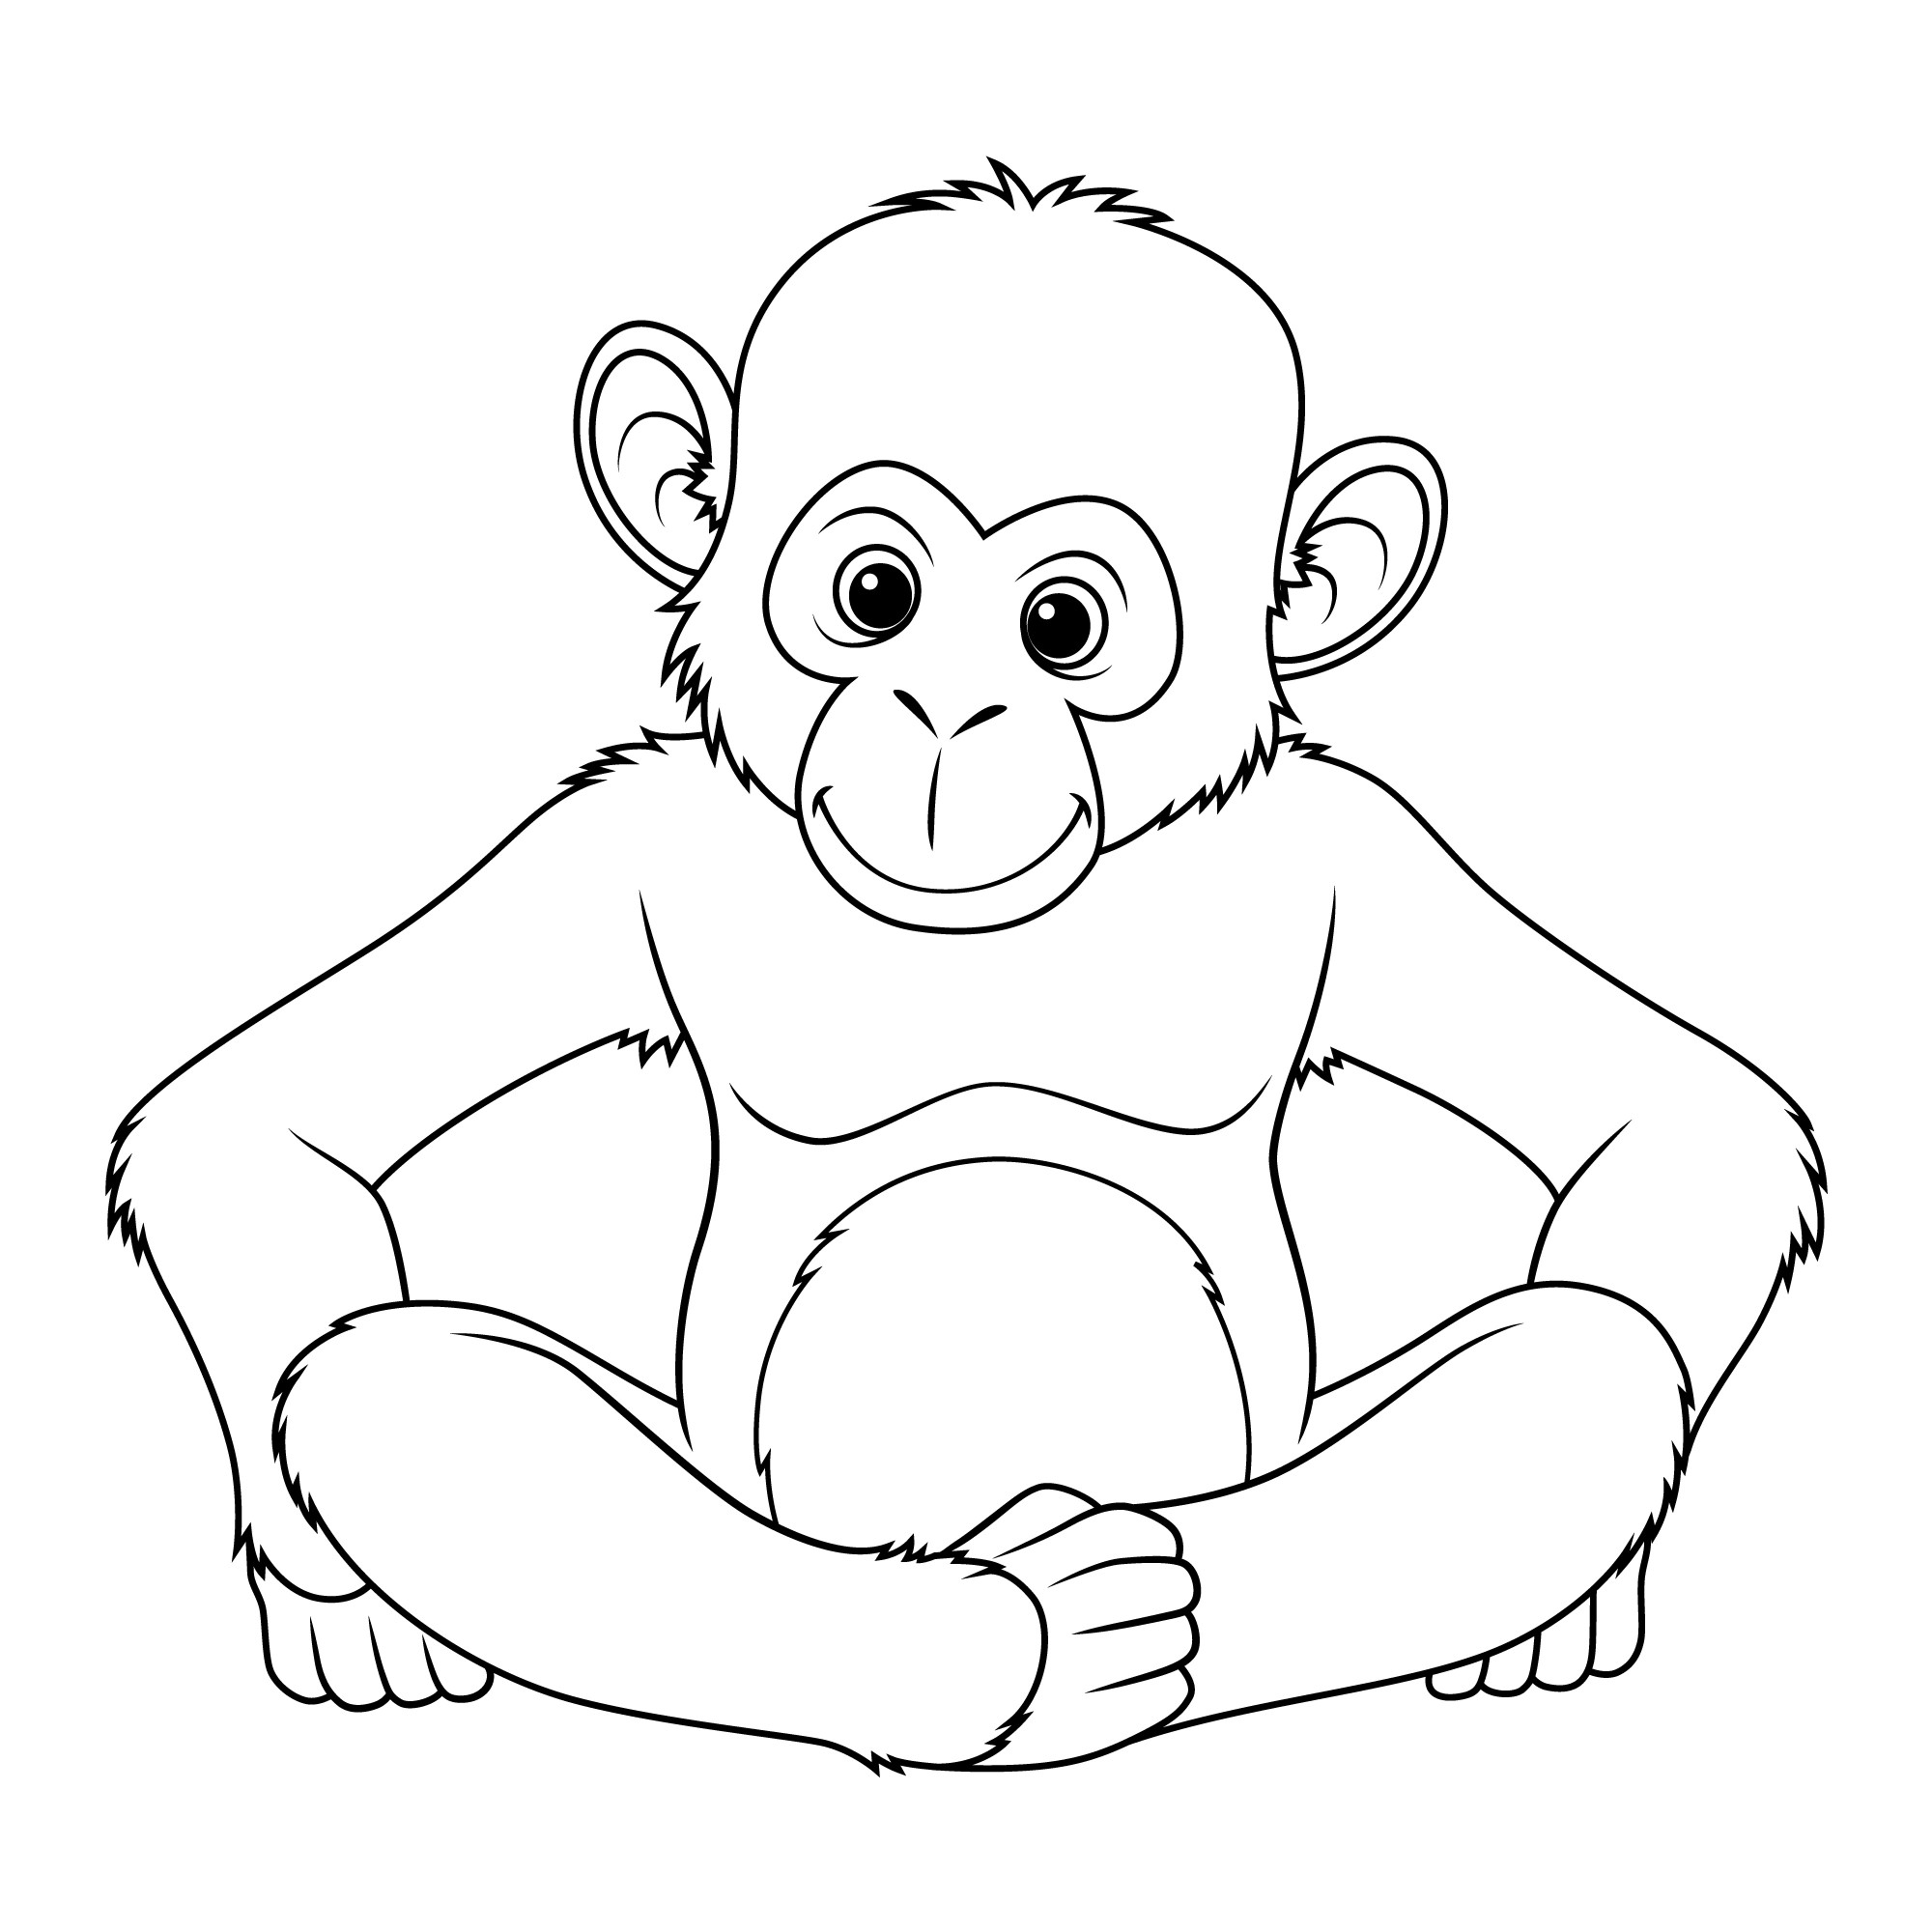 Раскраска для детей: обезьяна шимпанзе сидит на задних лапах